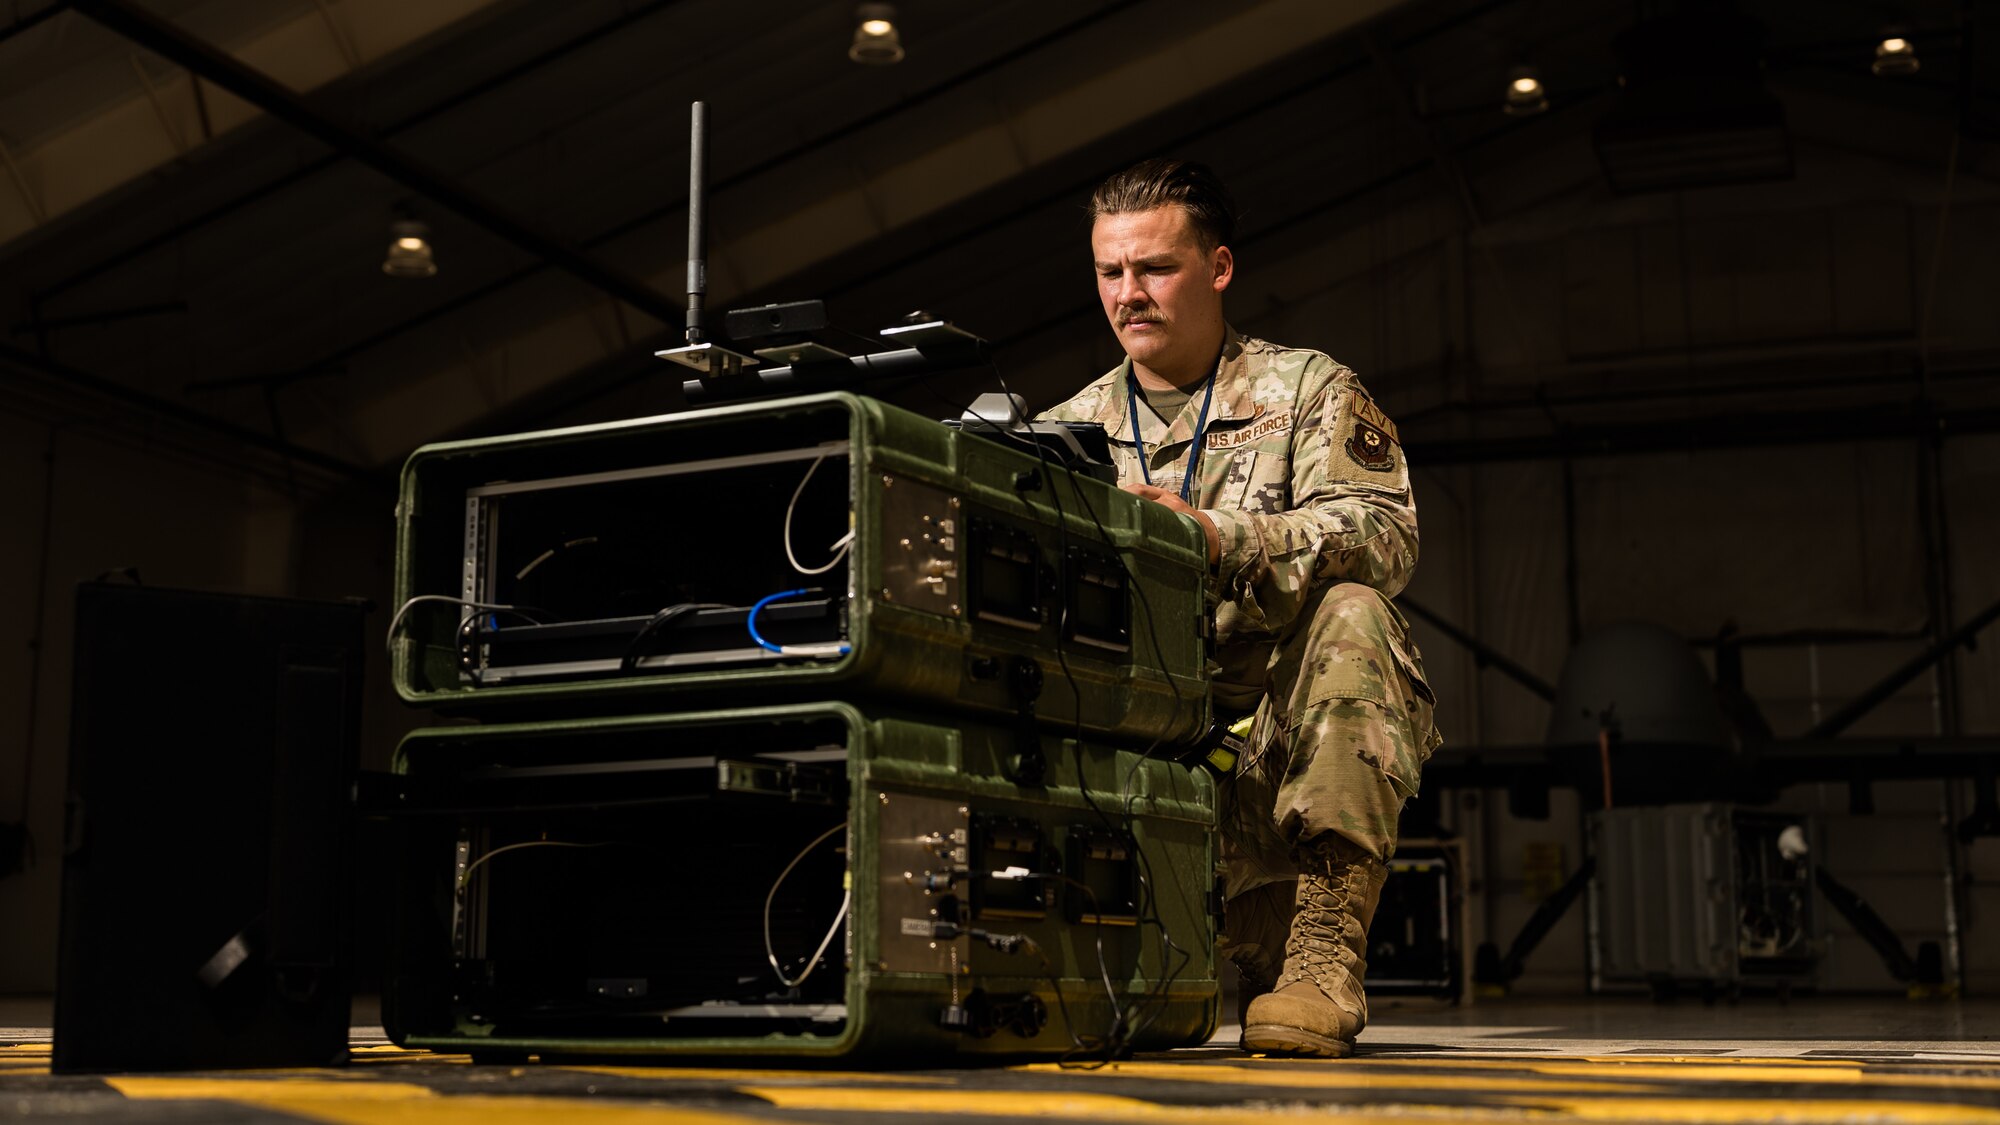 An Air Force Technical Sergeant operates a piece of maintenance equipment.